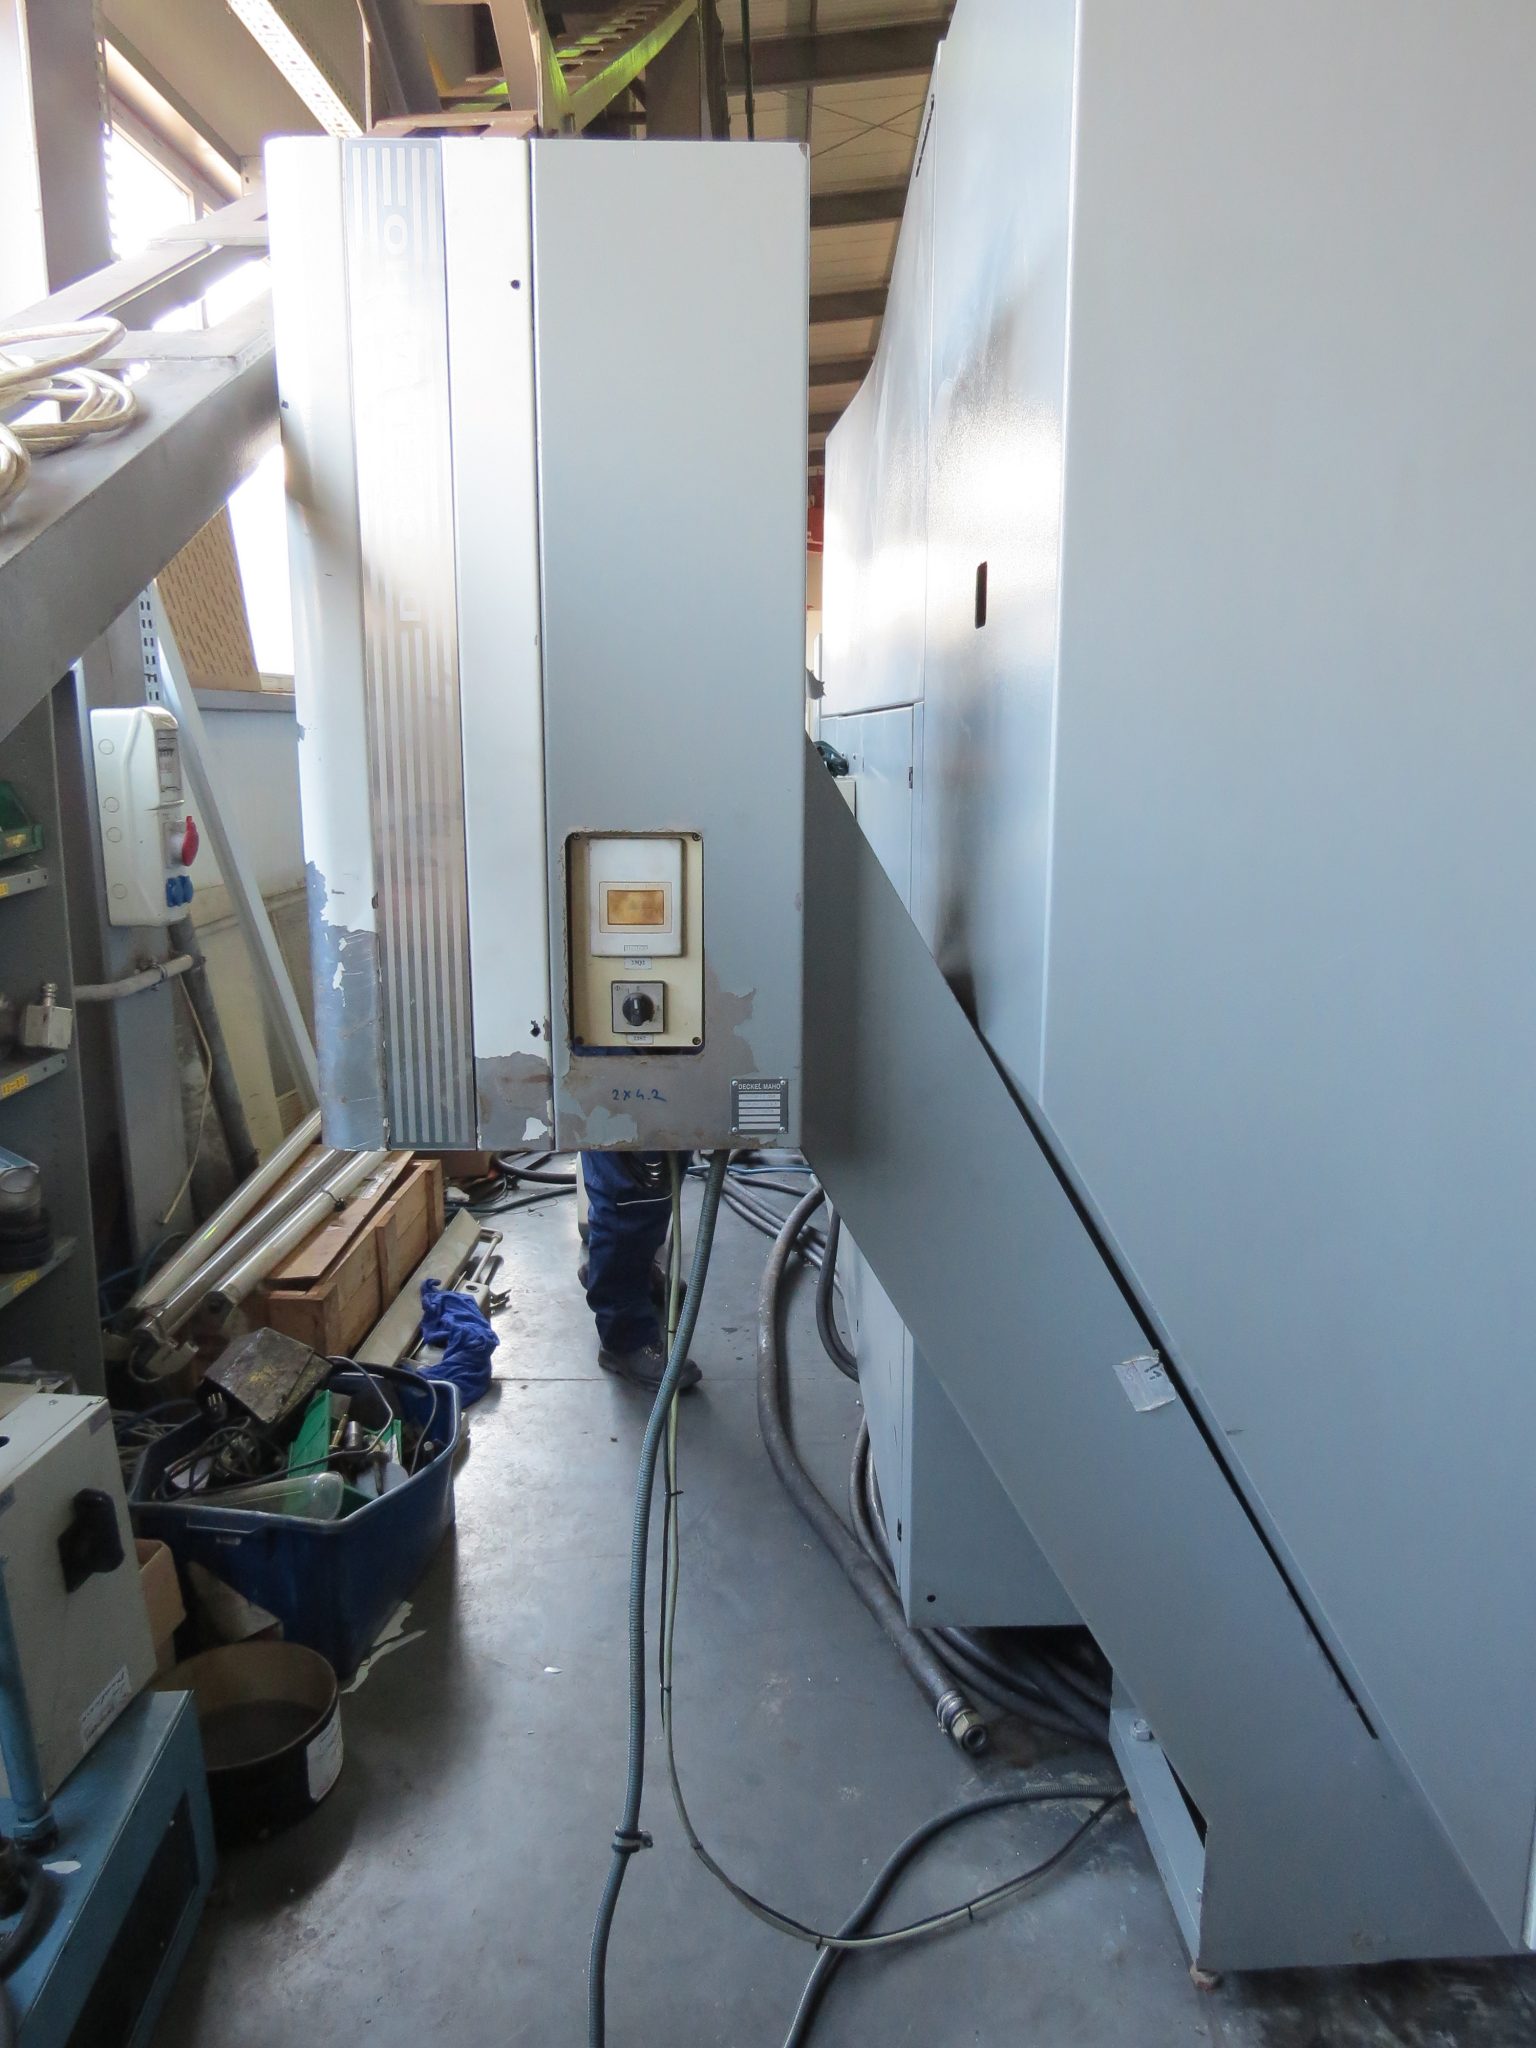 Machining Centres (General)/DECKEL MAHO DMC 60 S, 6-sided machining, bar feeder